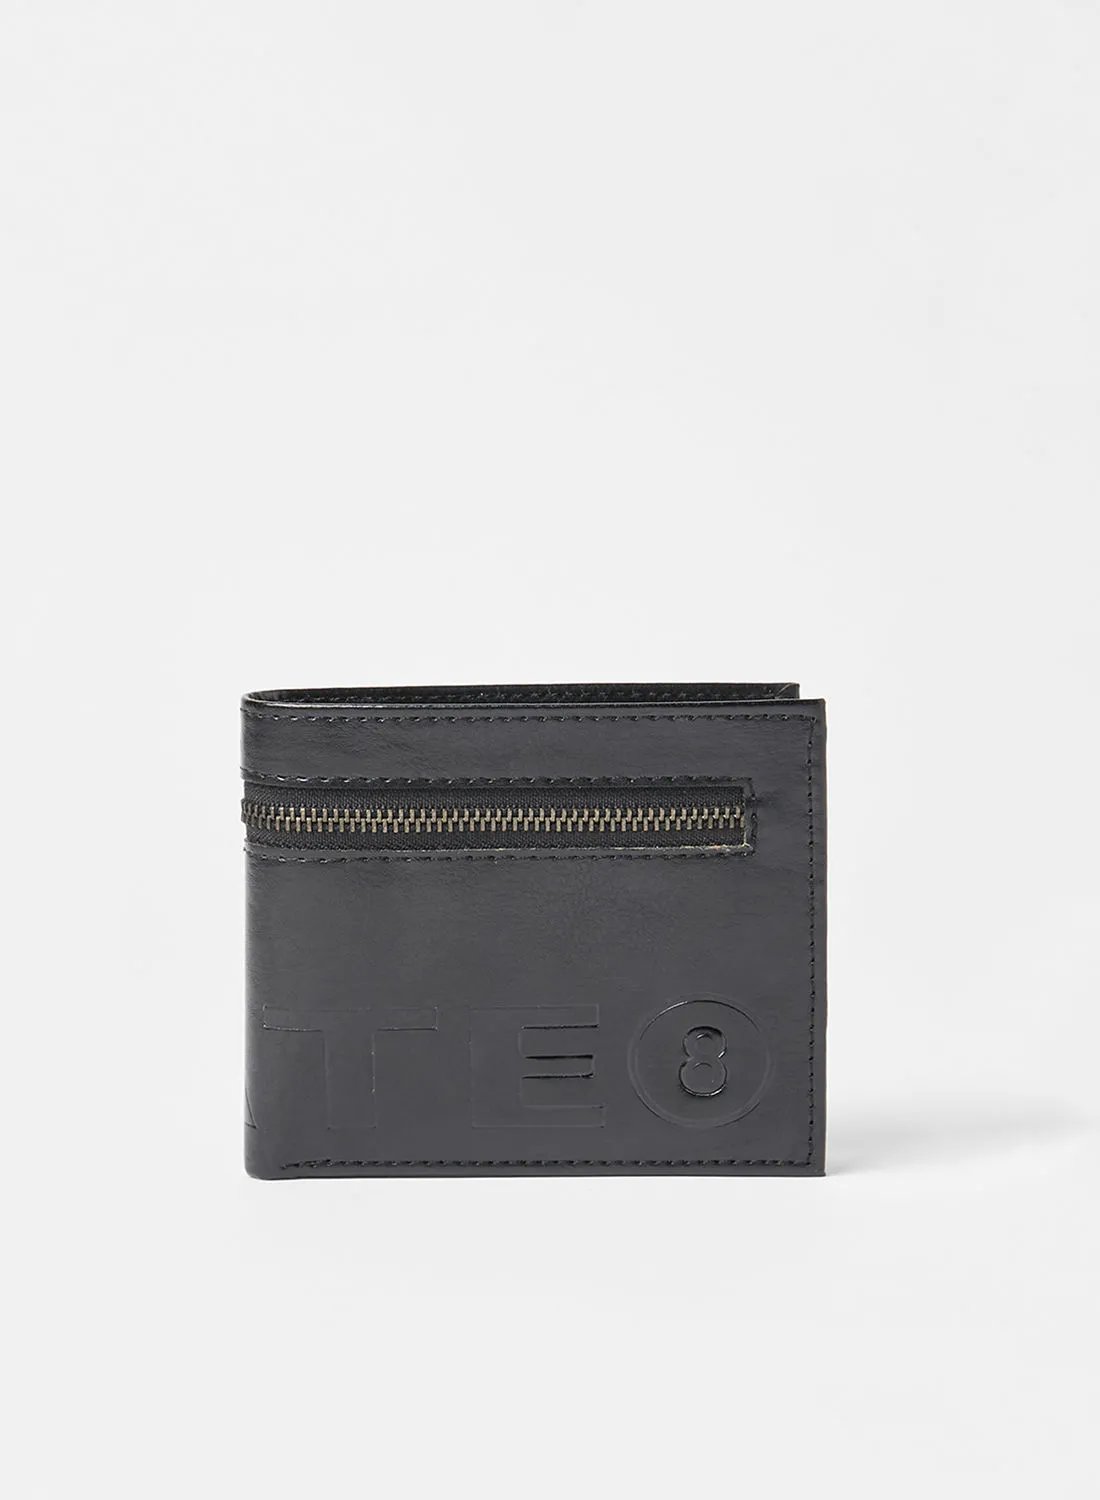 STATE 8 Logo Bi-Fold Wallet Black